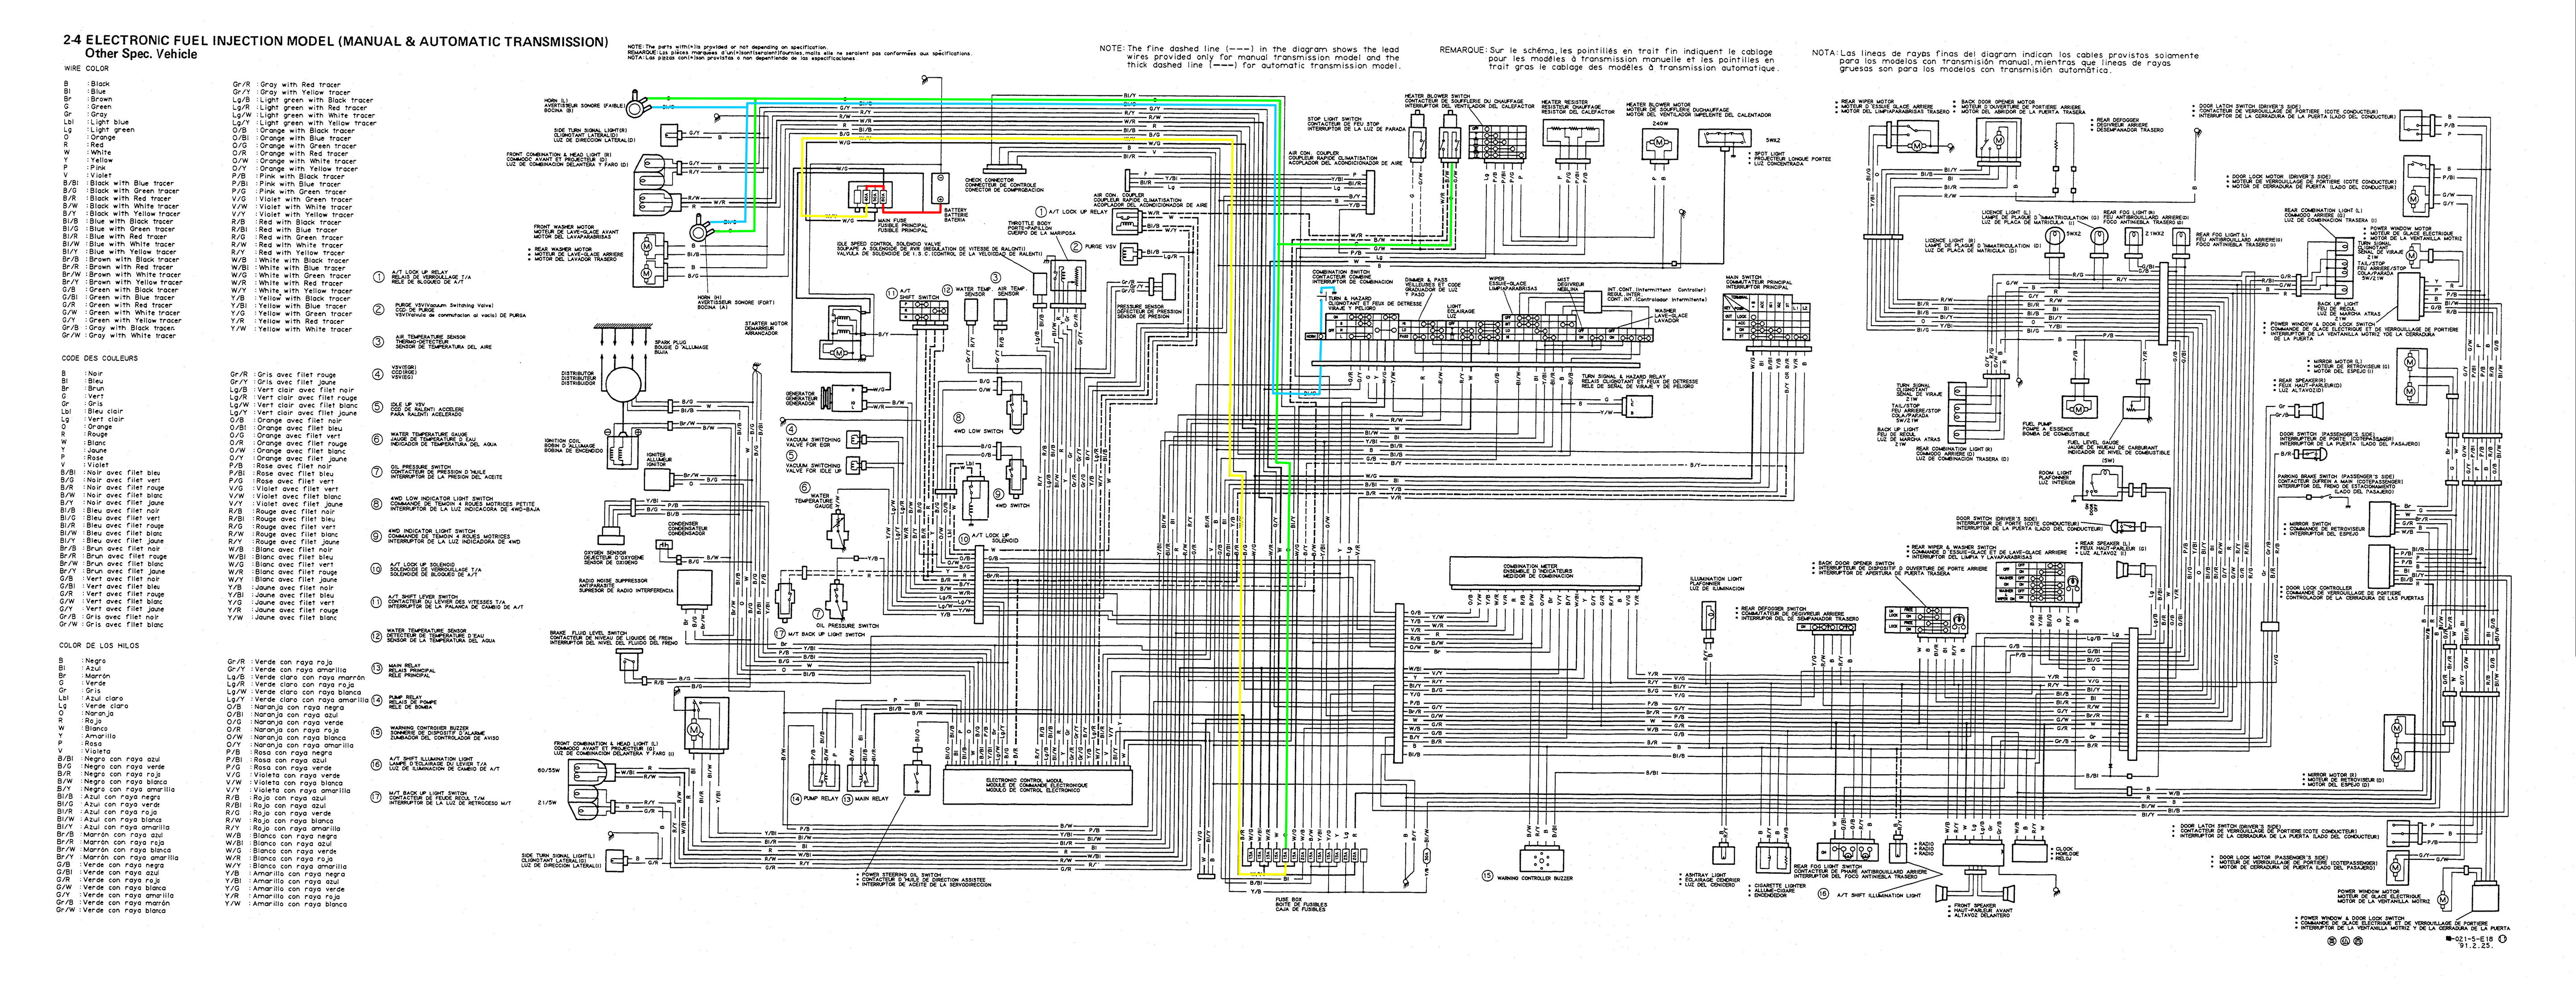 Vitara injection model wiring diagram SE416.jpg